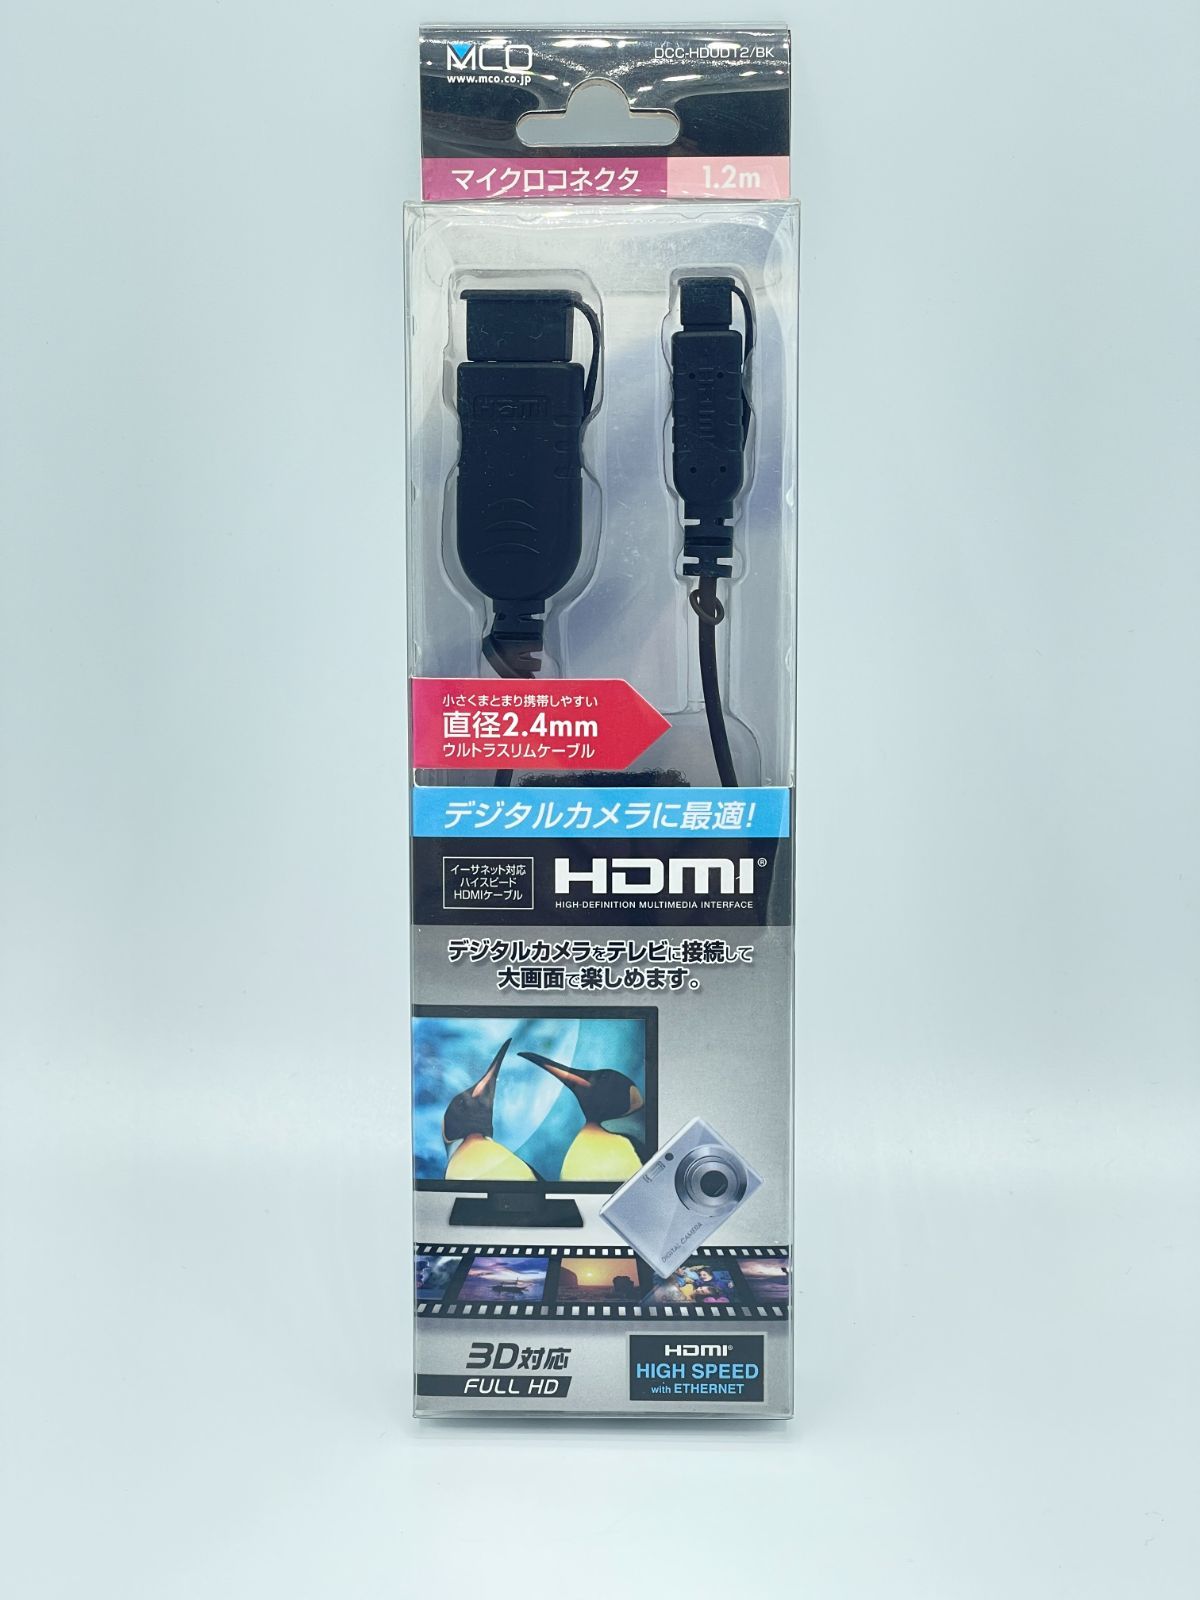 HDMIケーブル ハイスピード 1.2m - 映像用ケーブル